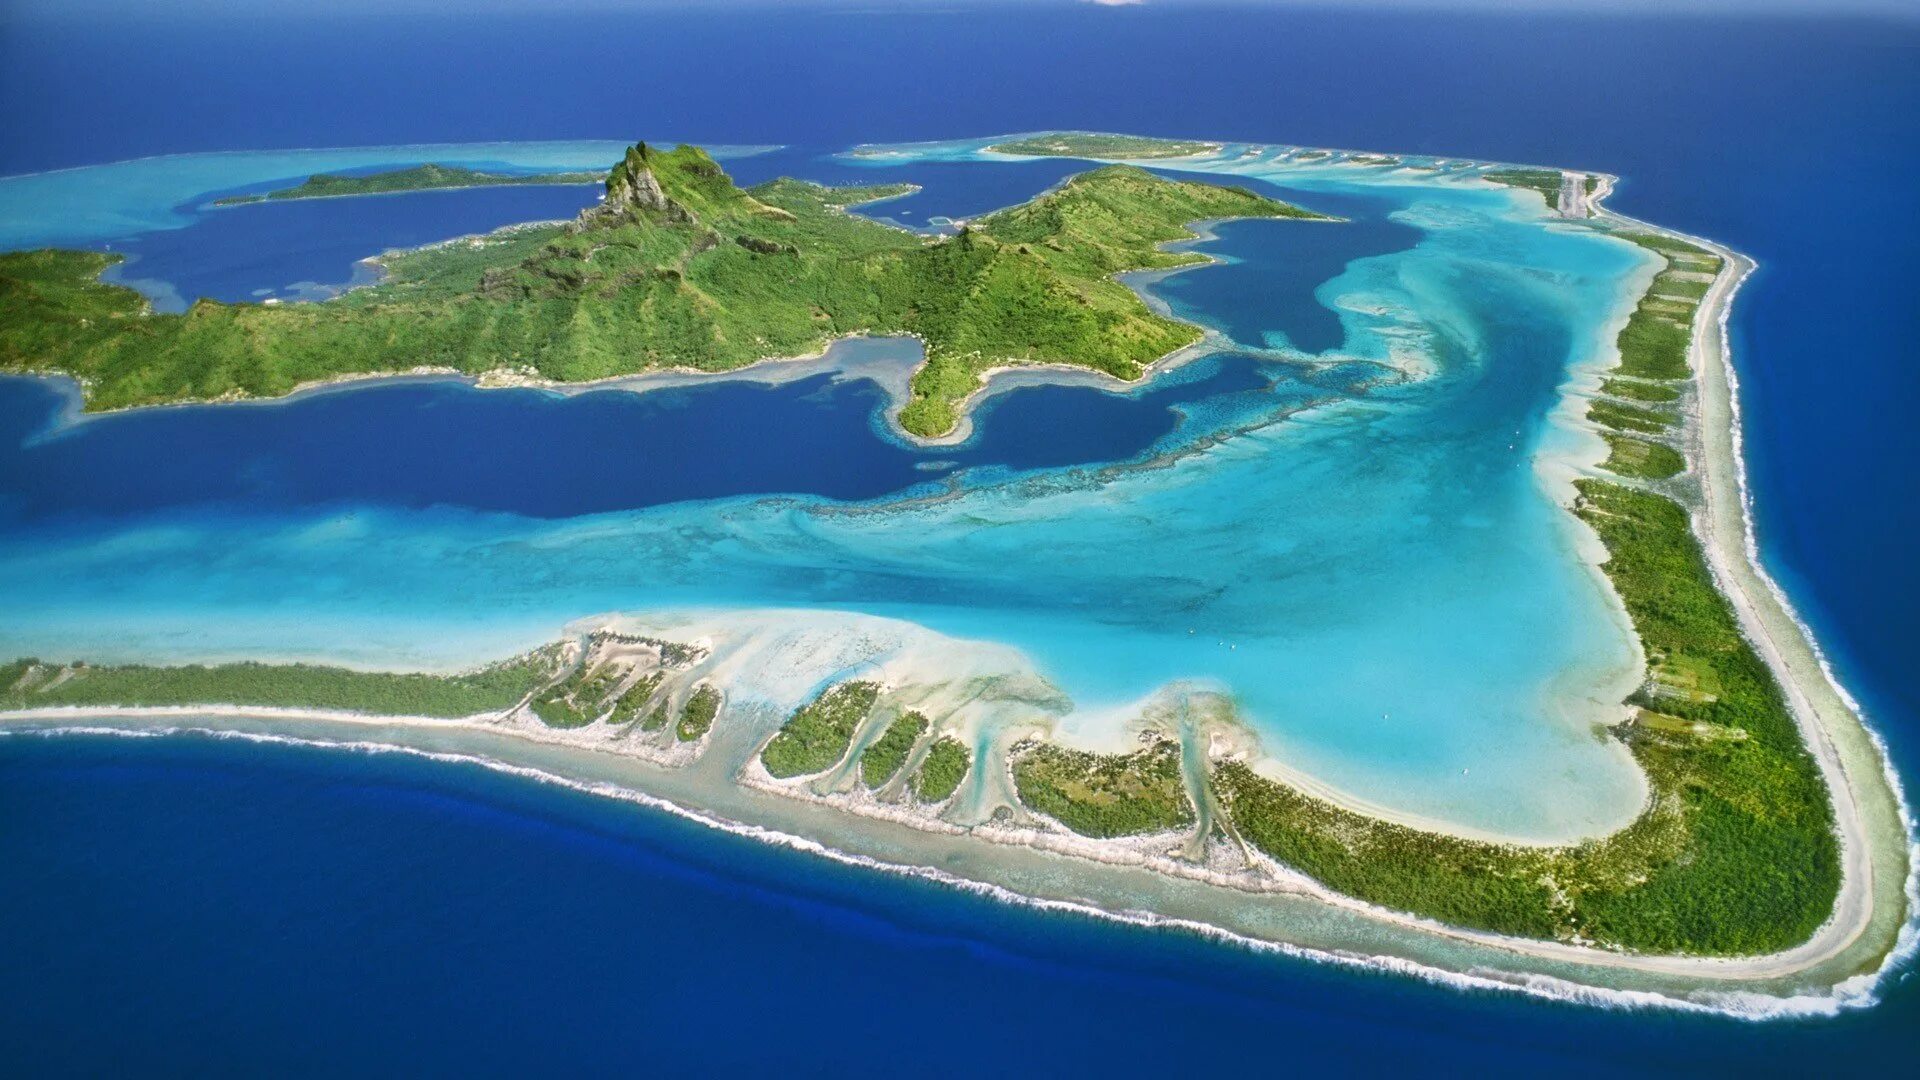 Остров Бора-Бора (Bora-Bora). Риф Раройя Полинезия. Атолл Дюси. Лагуна Атолл риф.